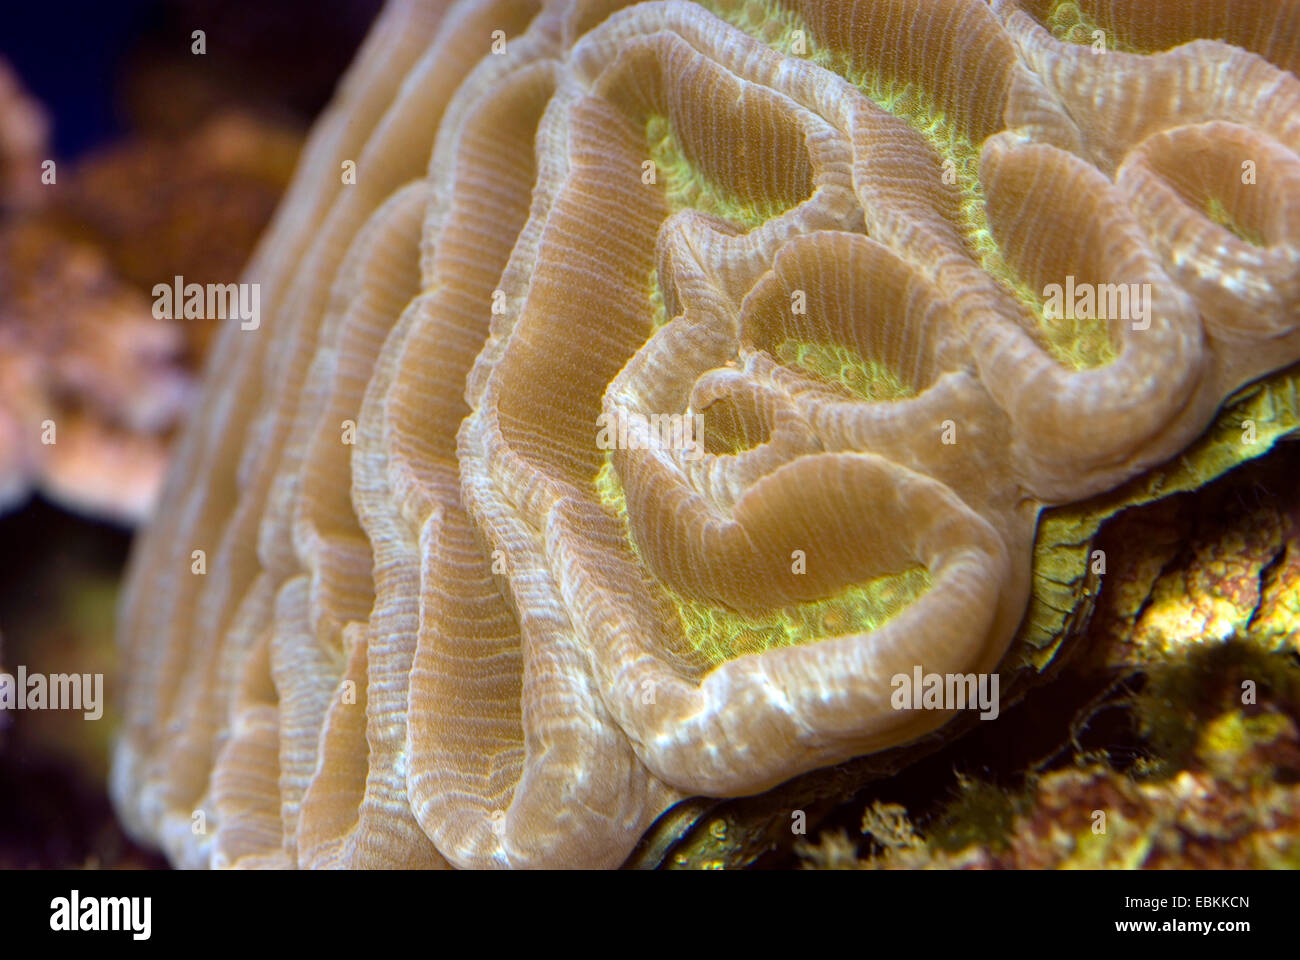 Brain Coral (Platygyra spec.), close-up view Stock Photo